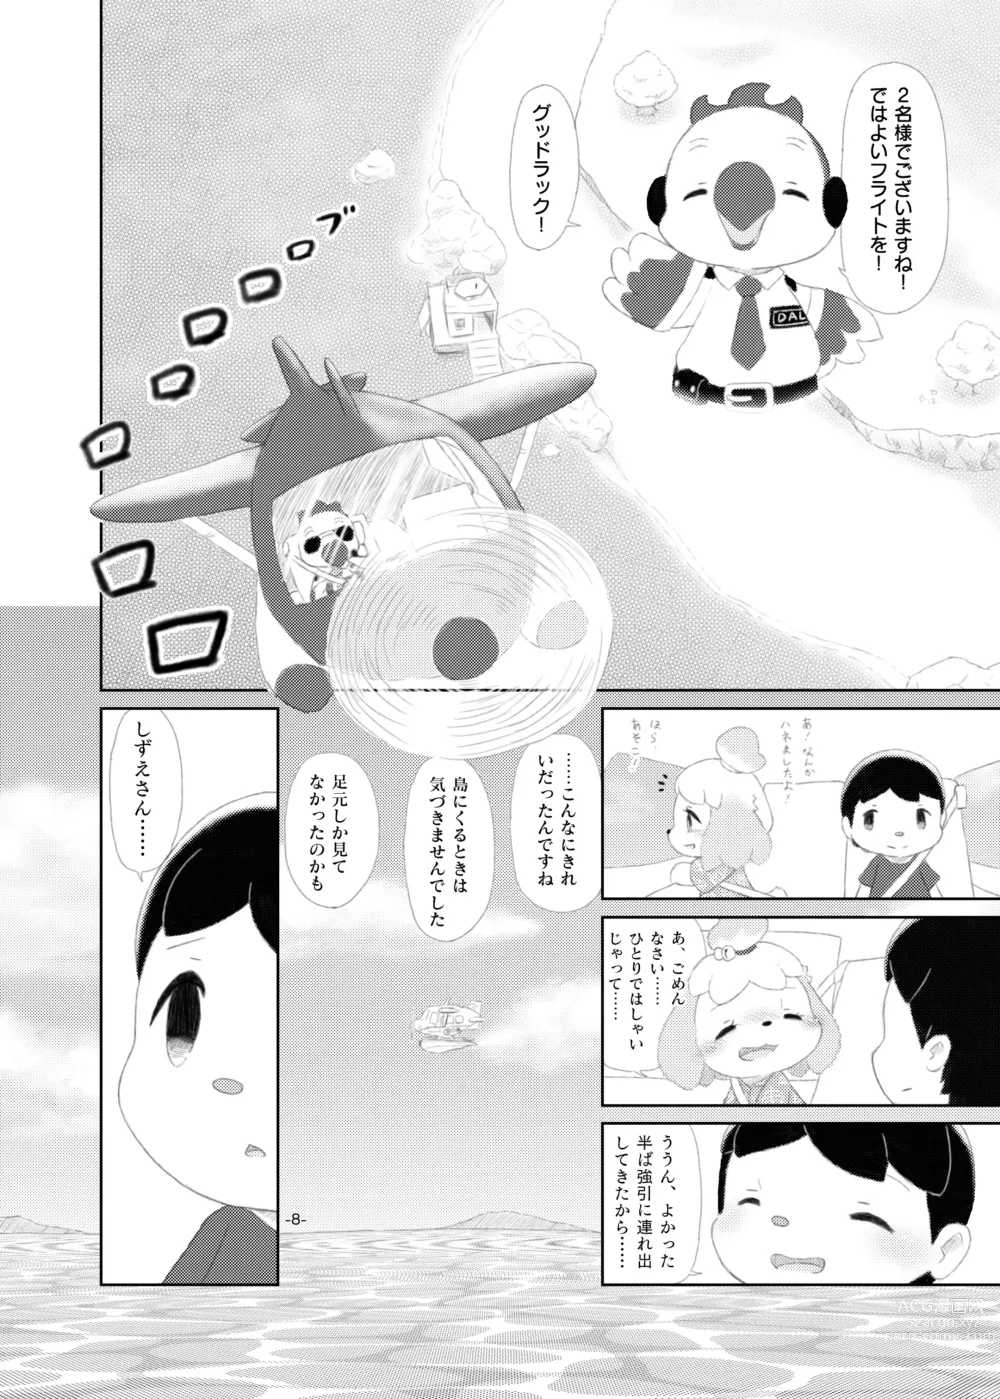 Page 7 of doujinshi semi colon